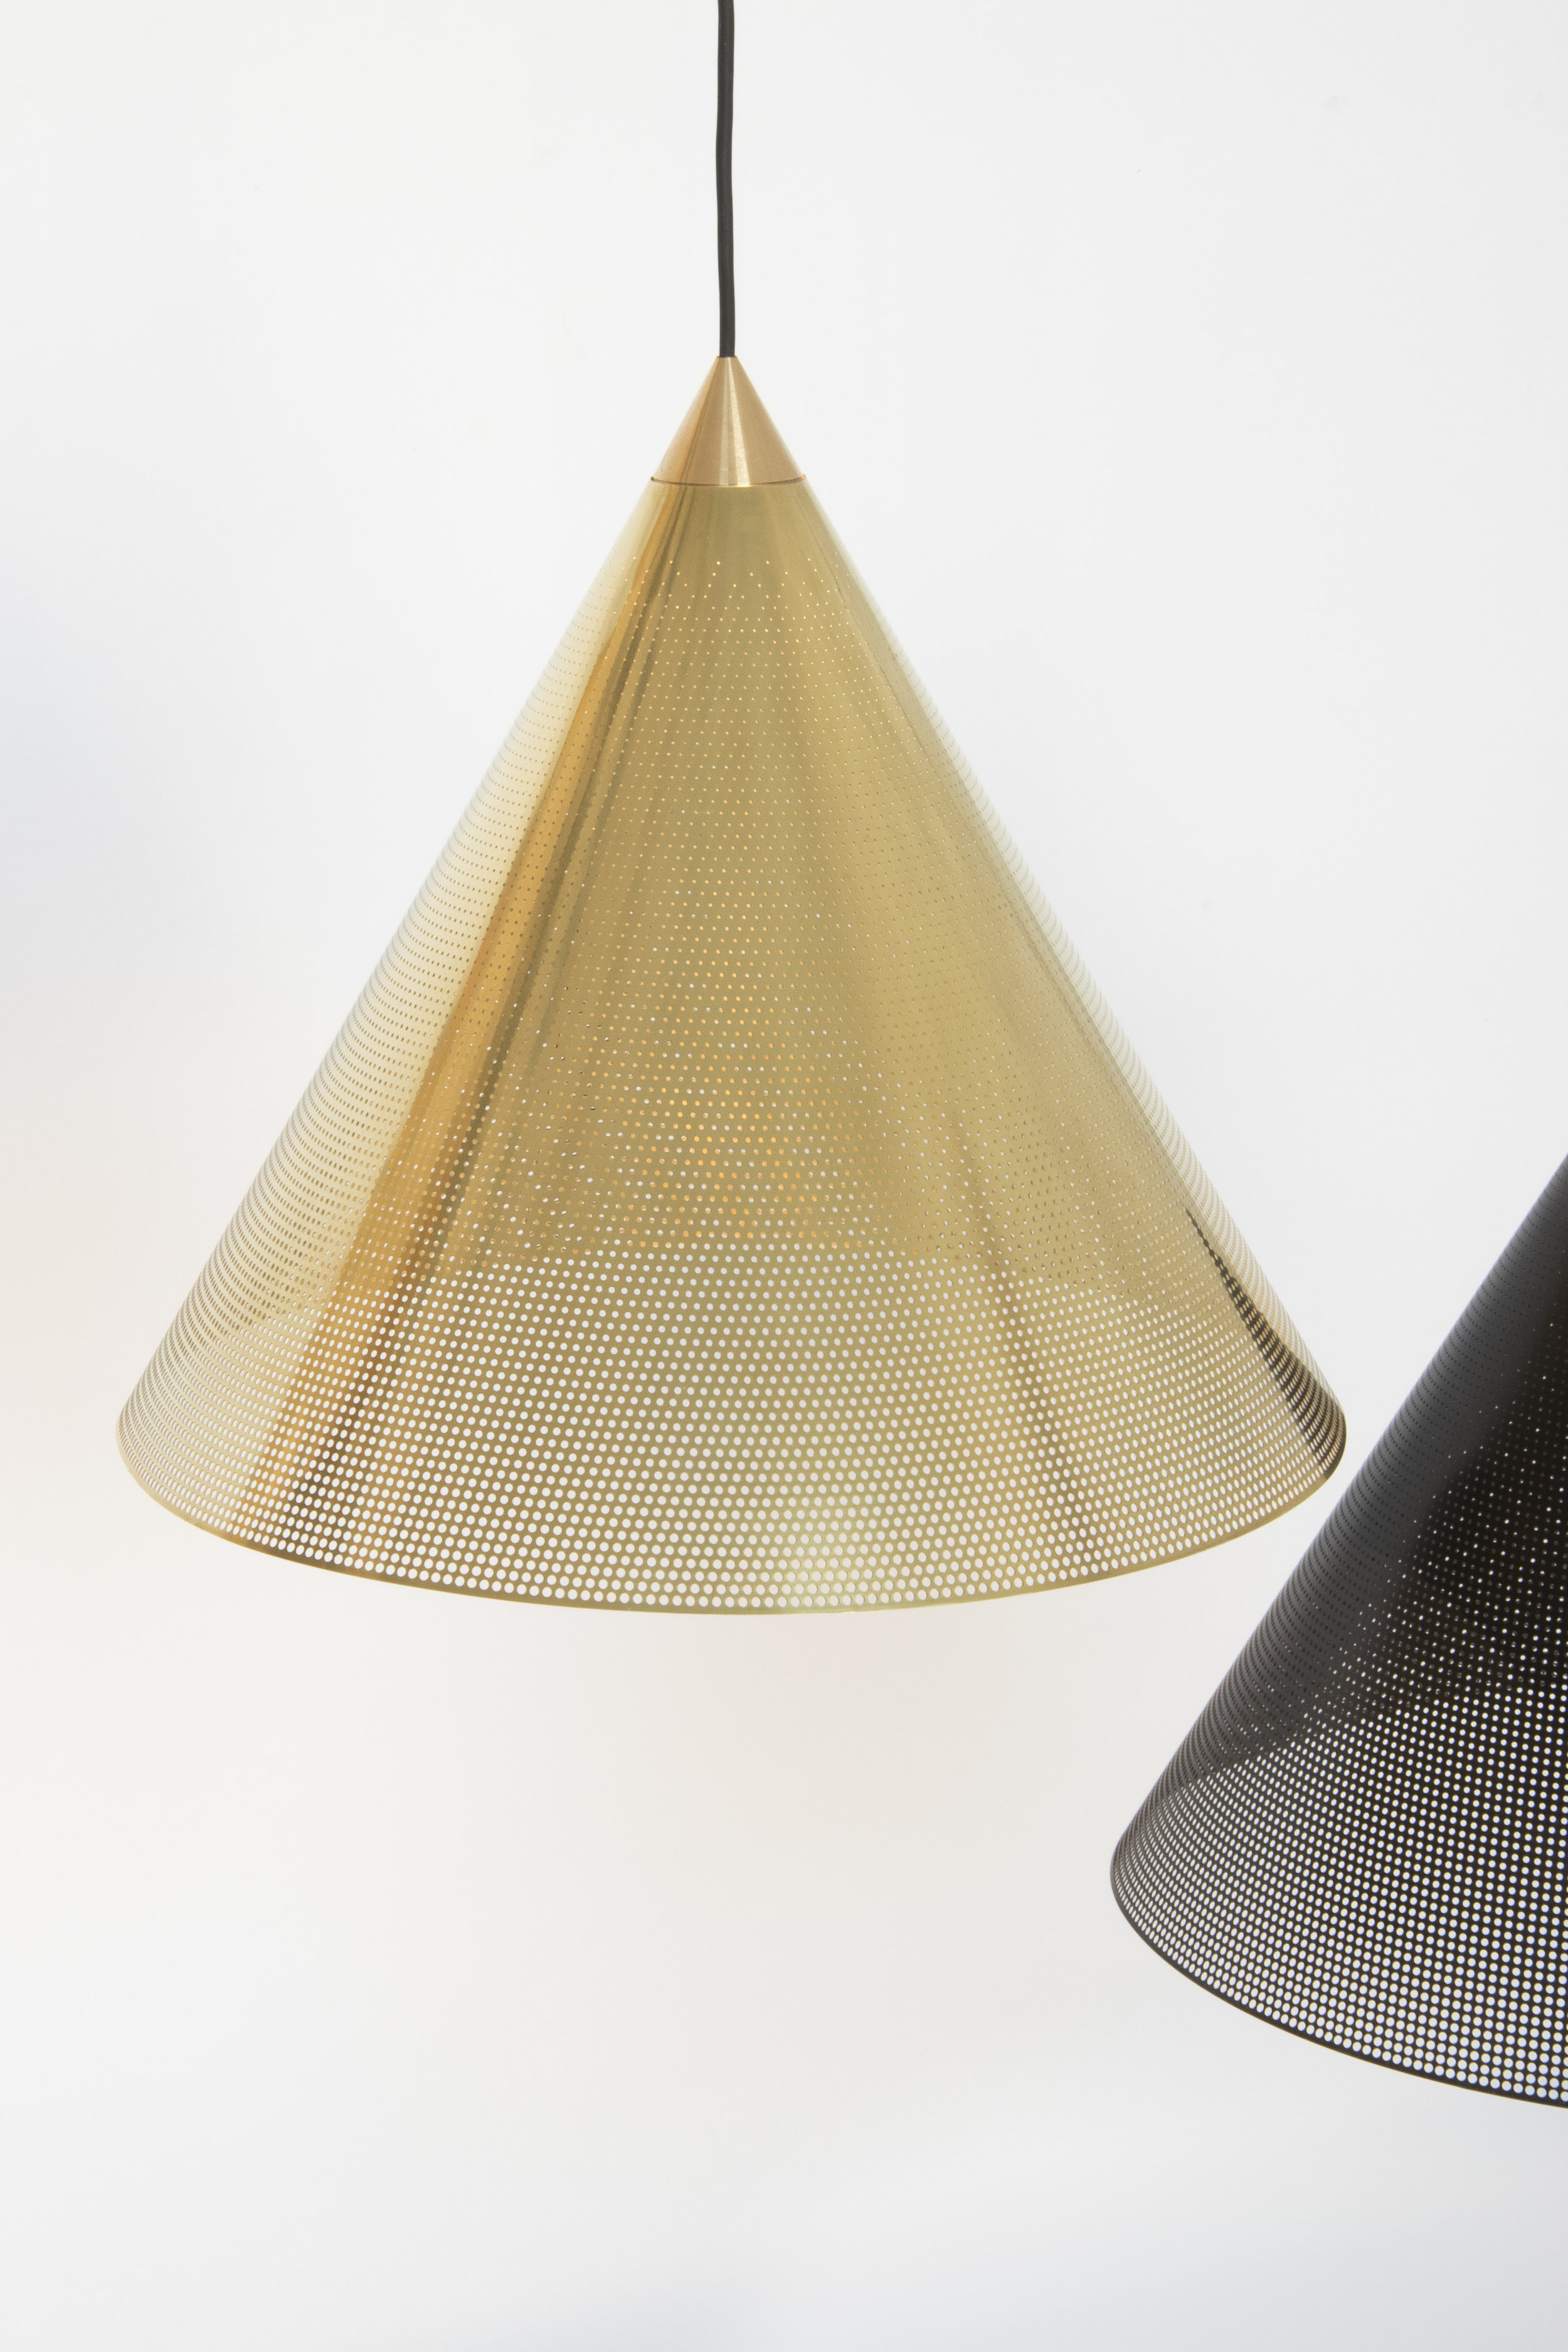 Lucid Lights pendant - David Derksen Design.jpg